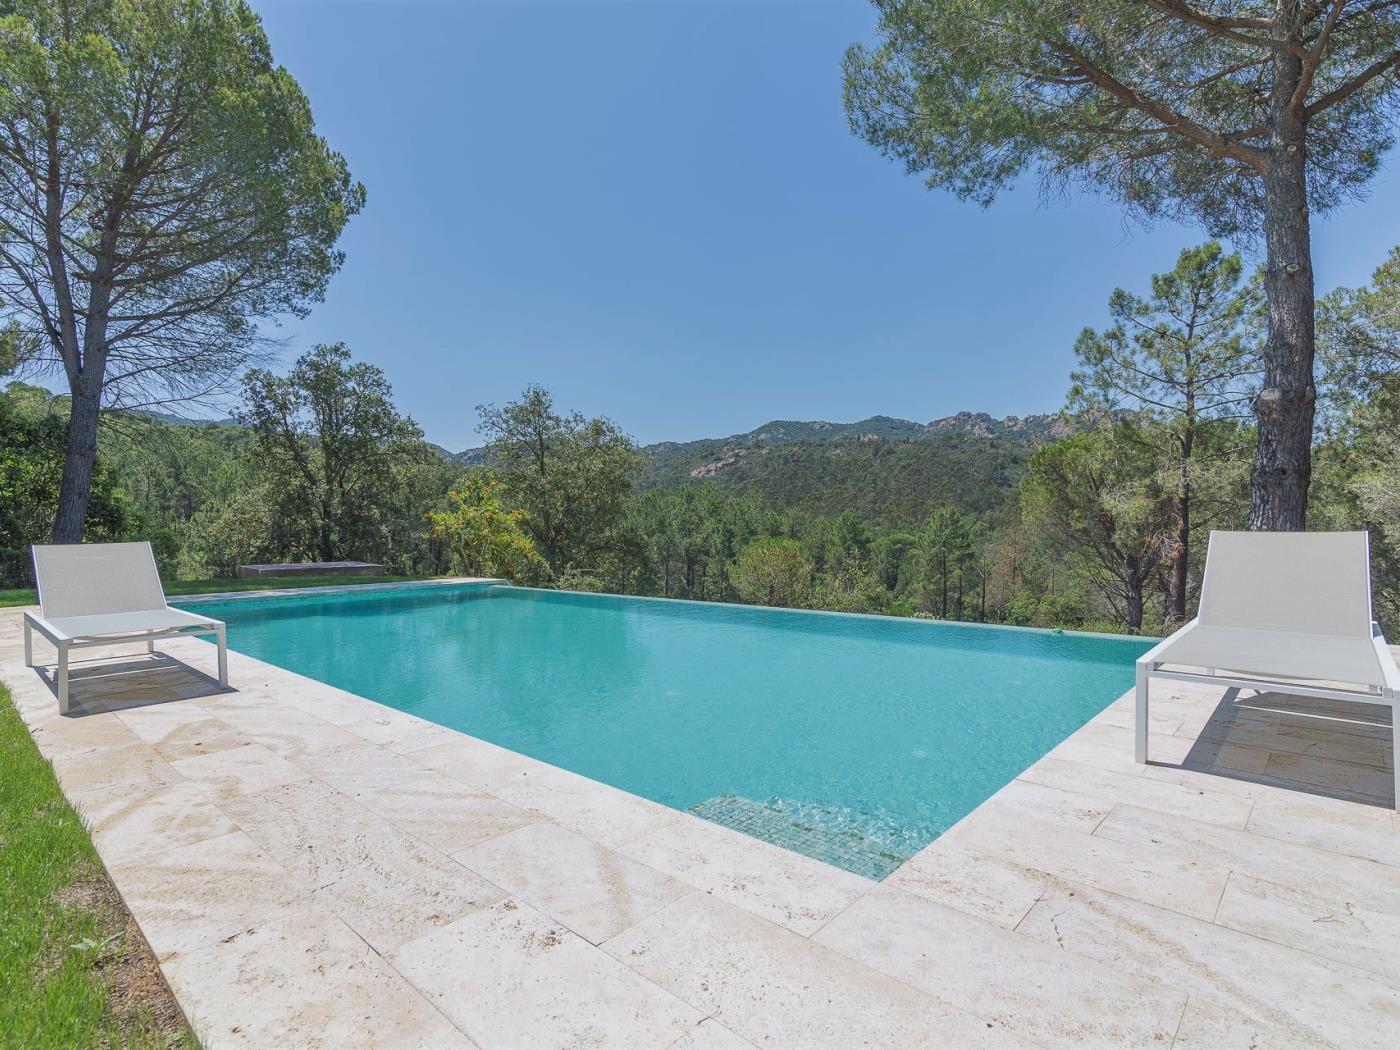 Casa Maravilla dans le Golf Costa Brava avec piscine à débordement privée. à Santa Cristina d'Aro